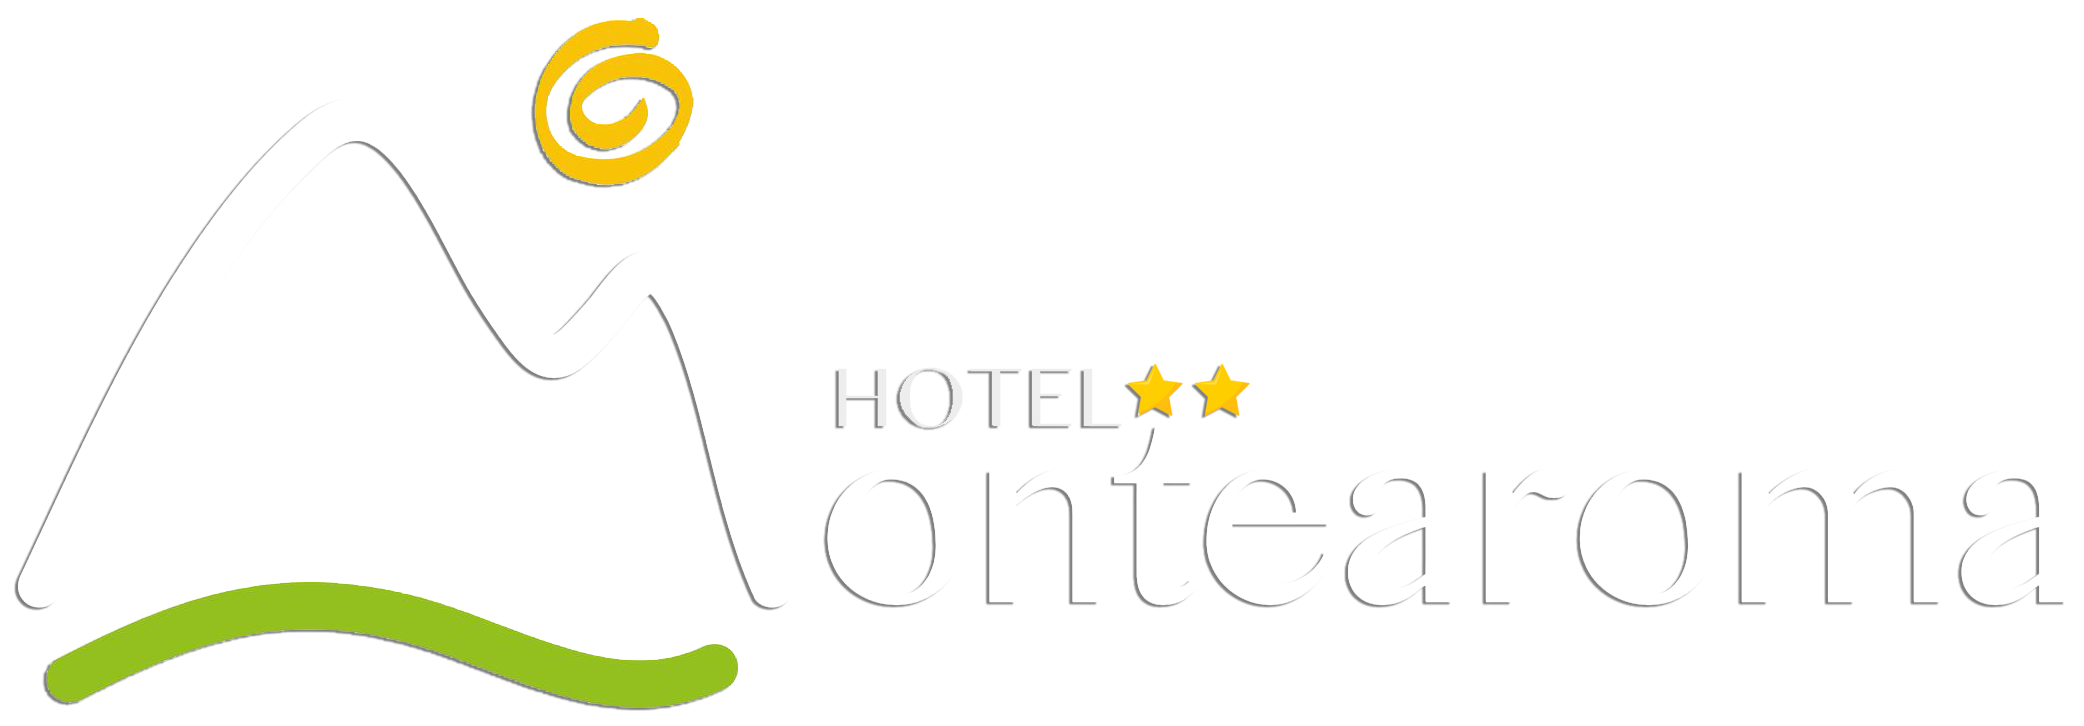 Hotel Montearoma | Valverde del Camino